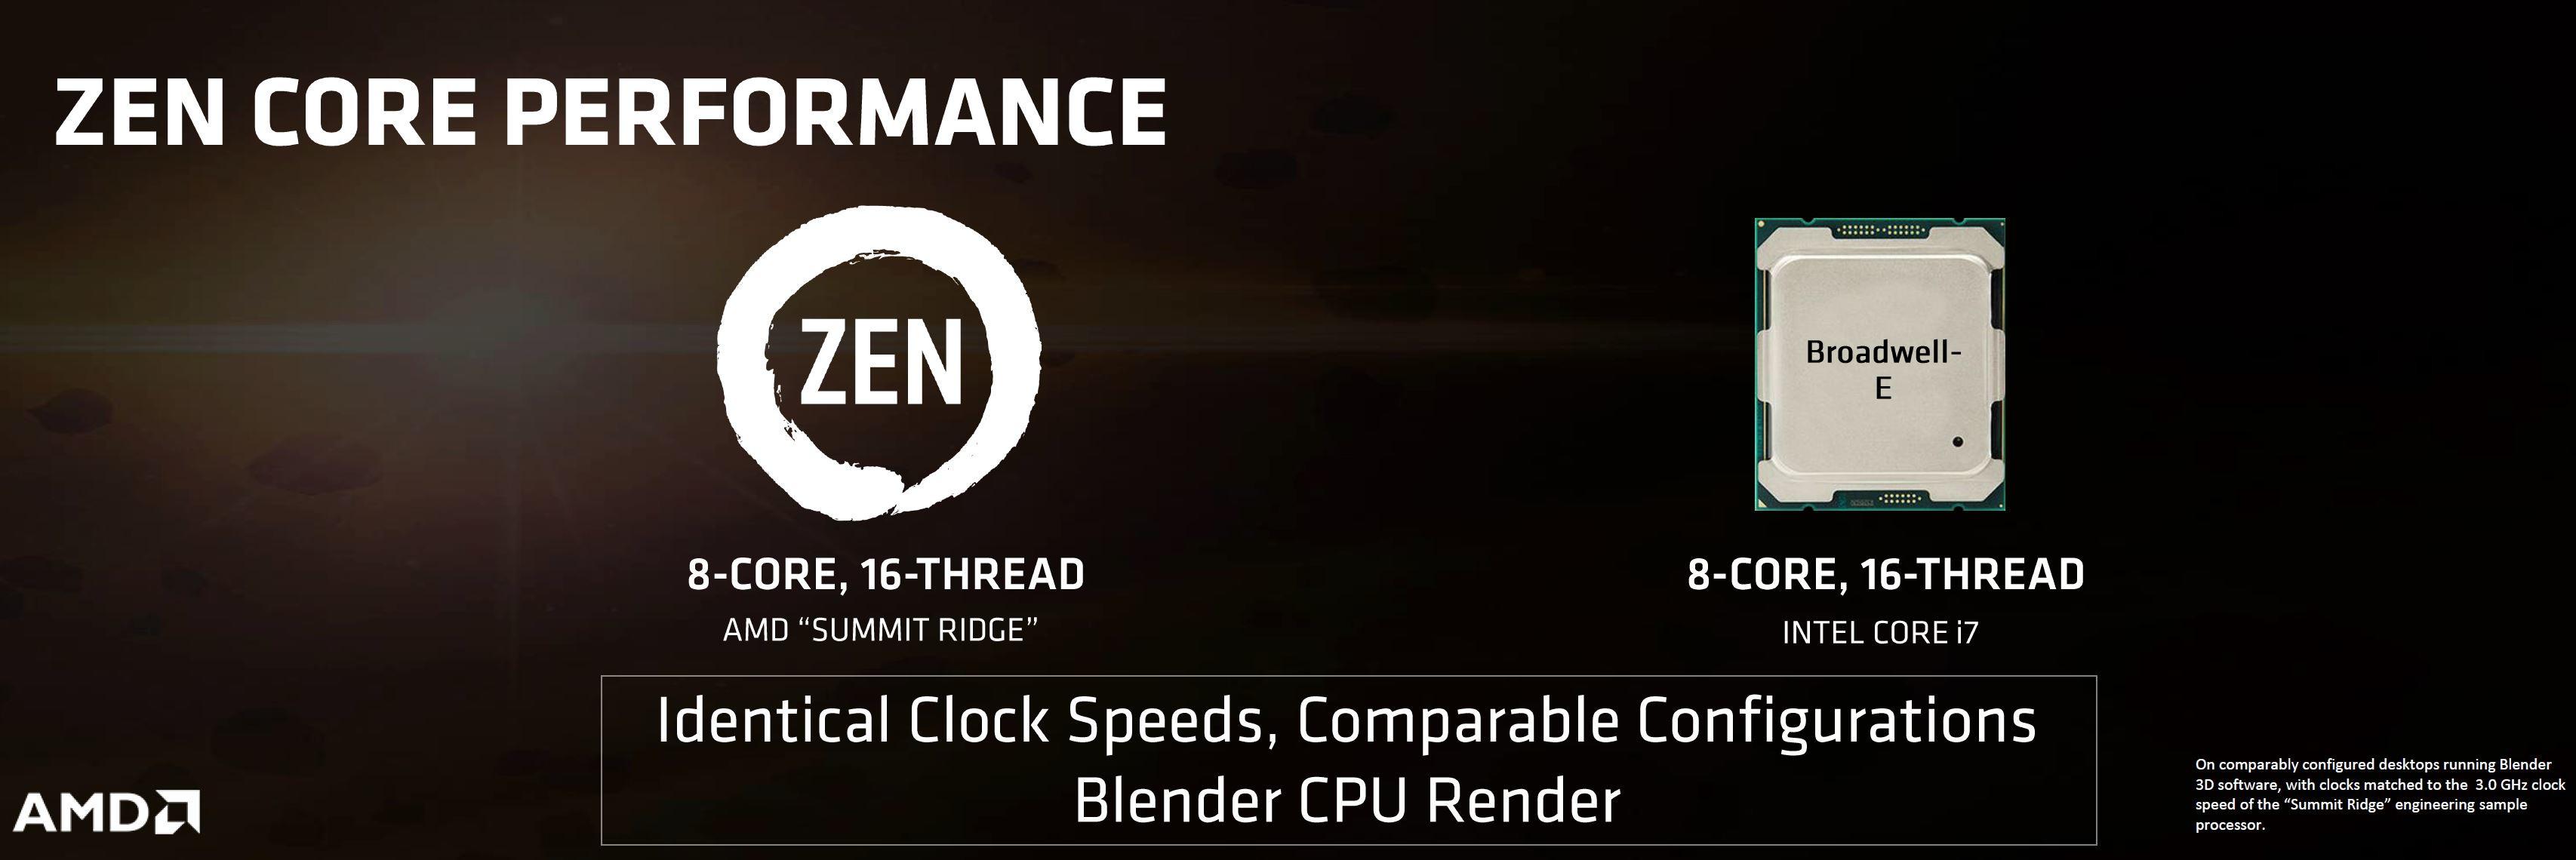 AMD Zen architecture comparison 01